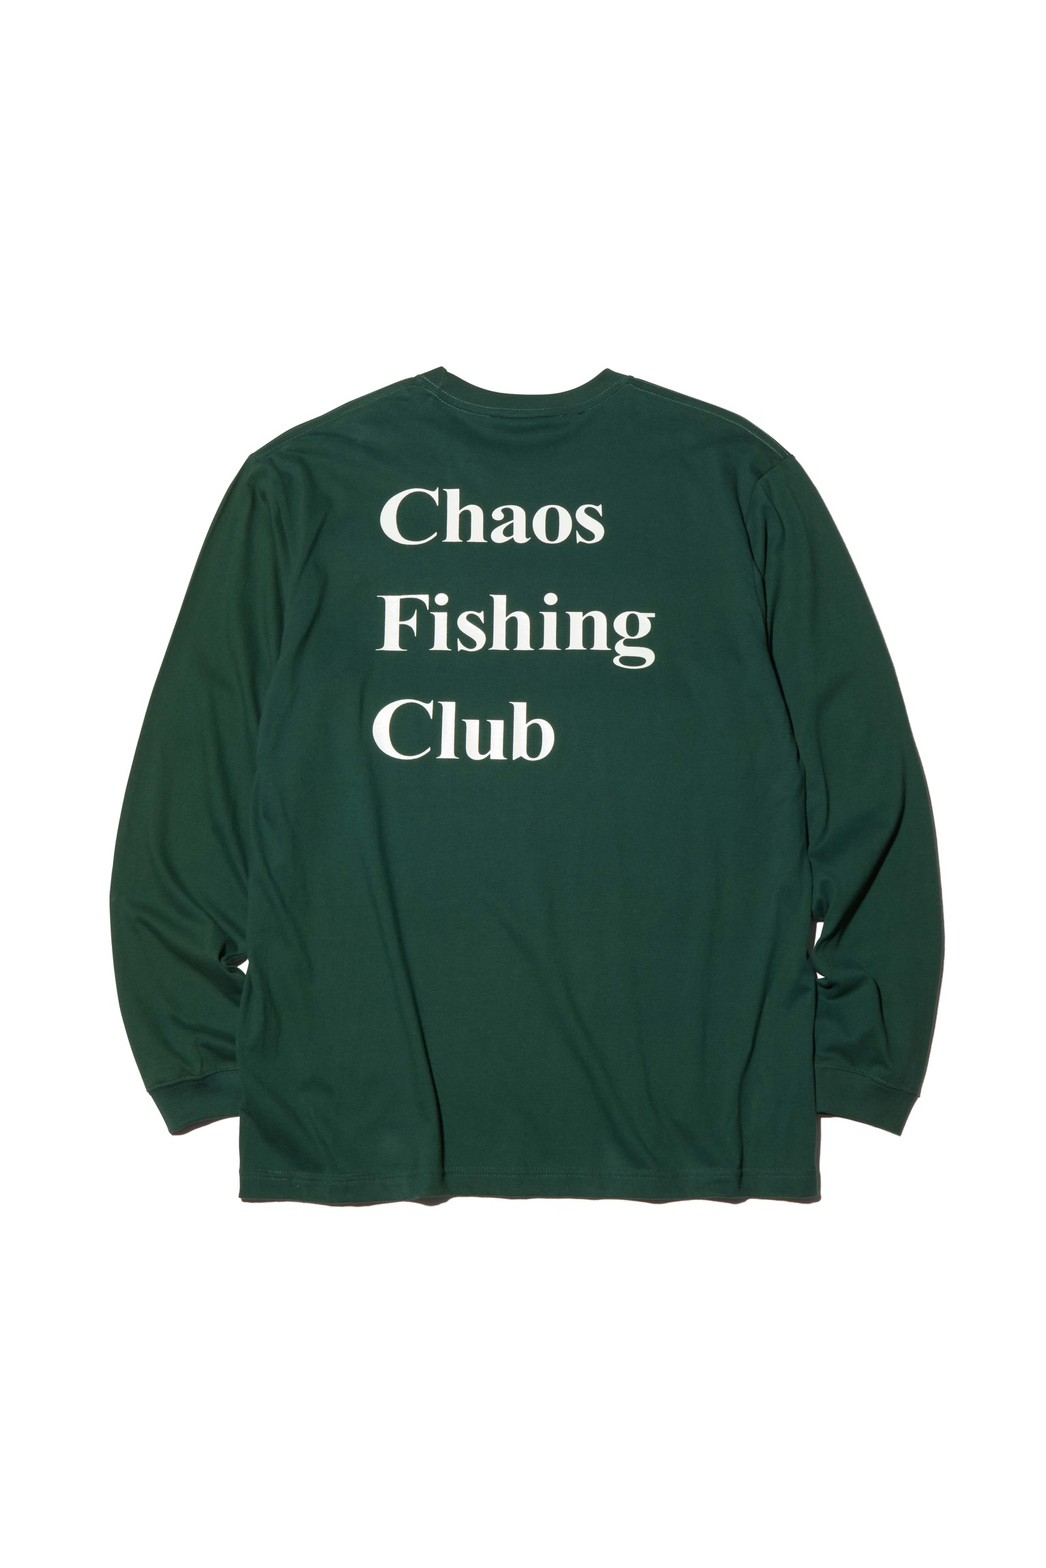 chaos fishing club カオスフィッシングクラブ